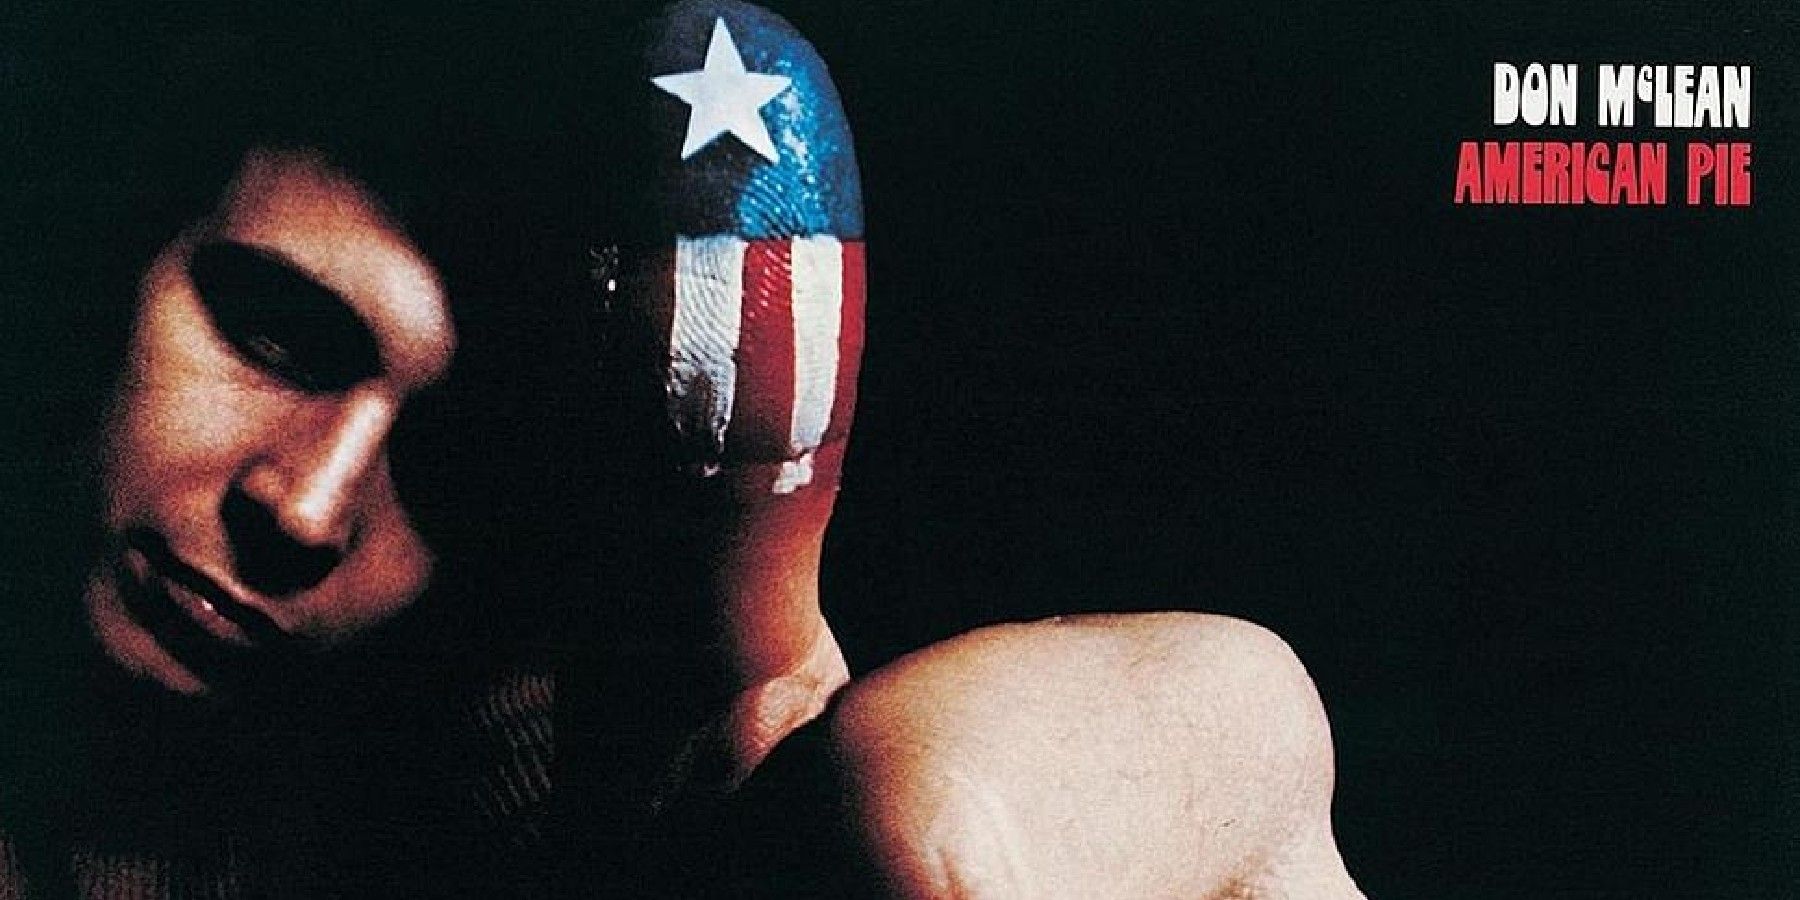 Don McLean American Pie image